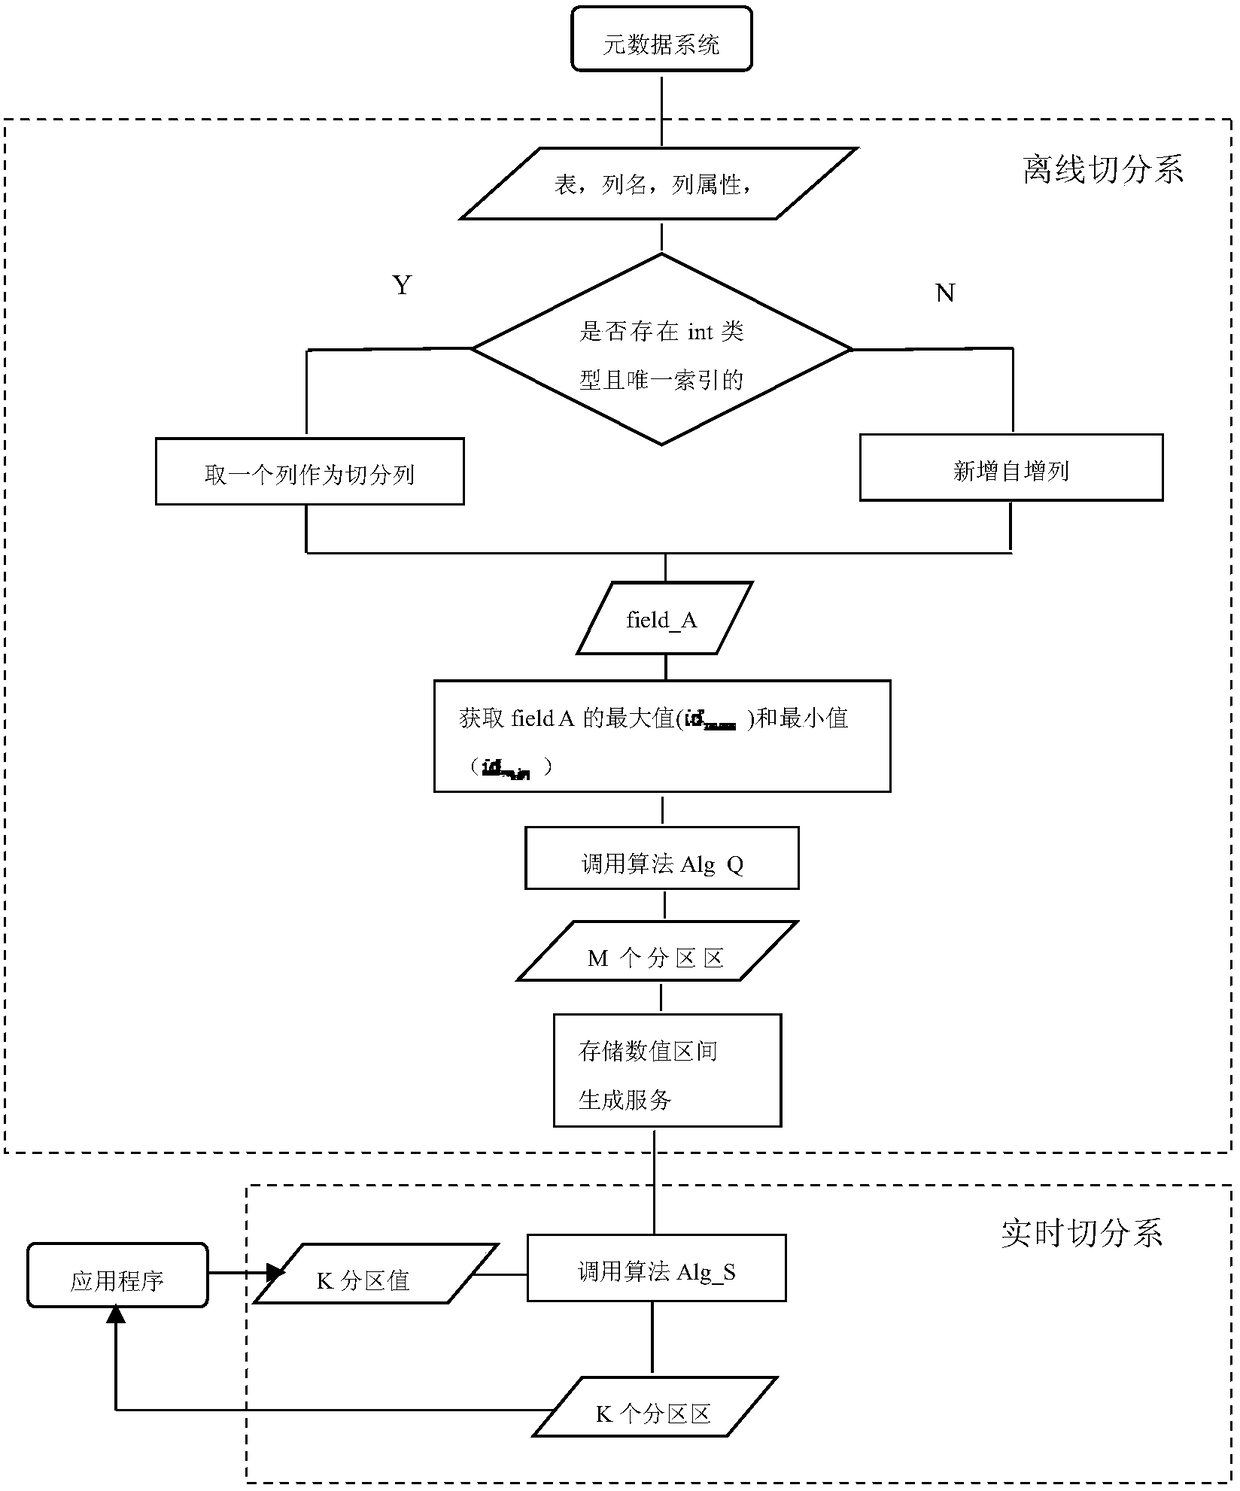 Method of uniformly segmenting database table data and computer equipment